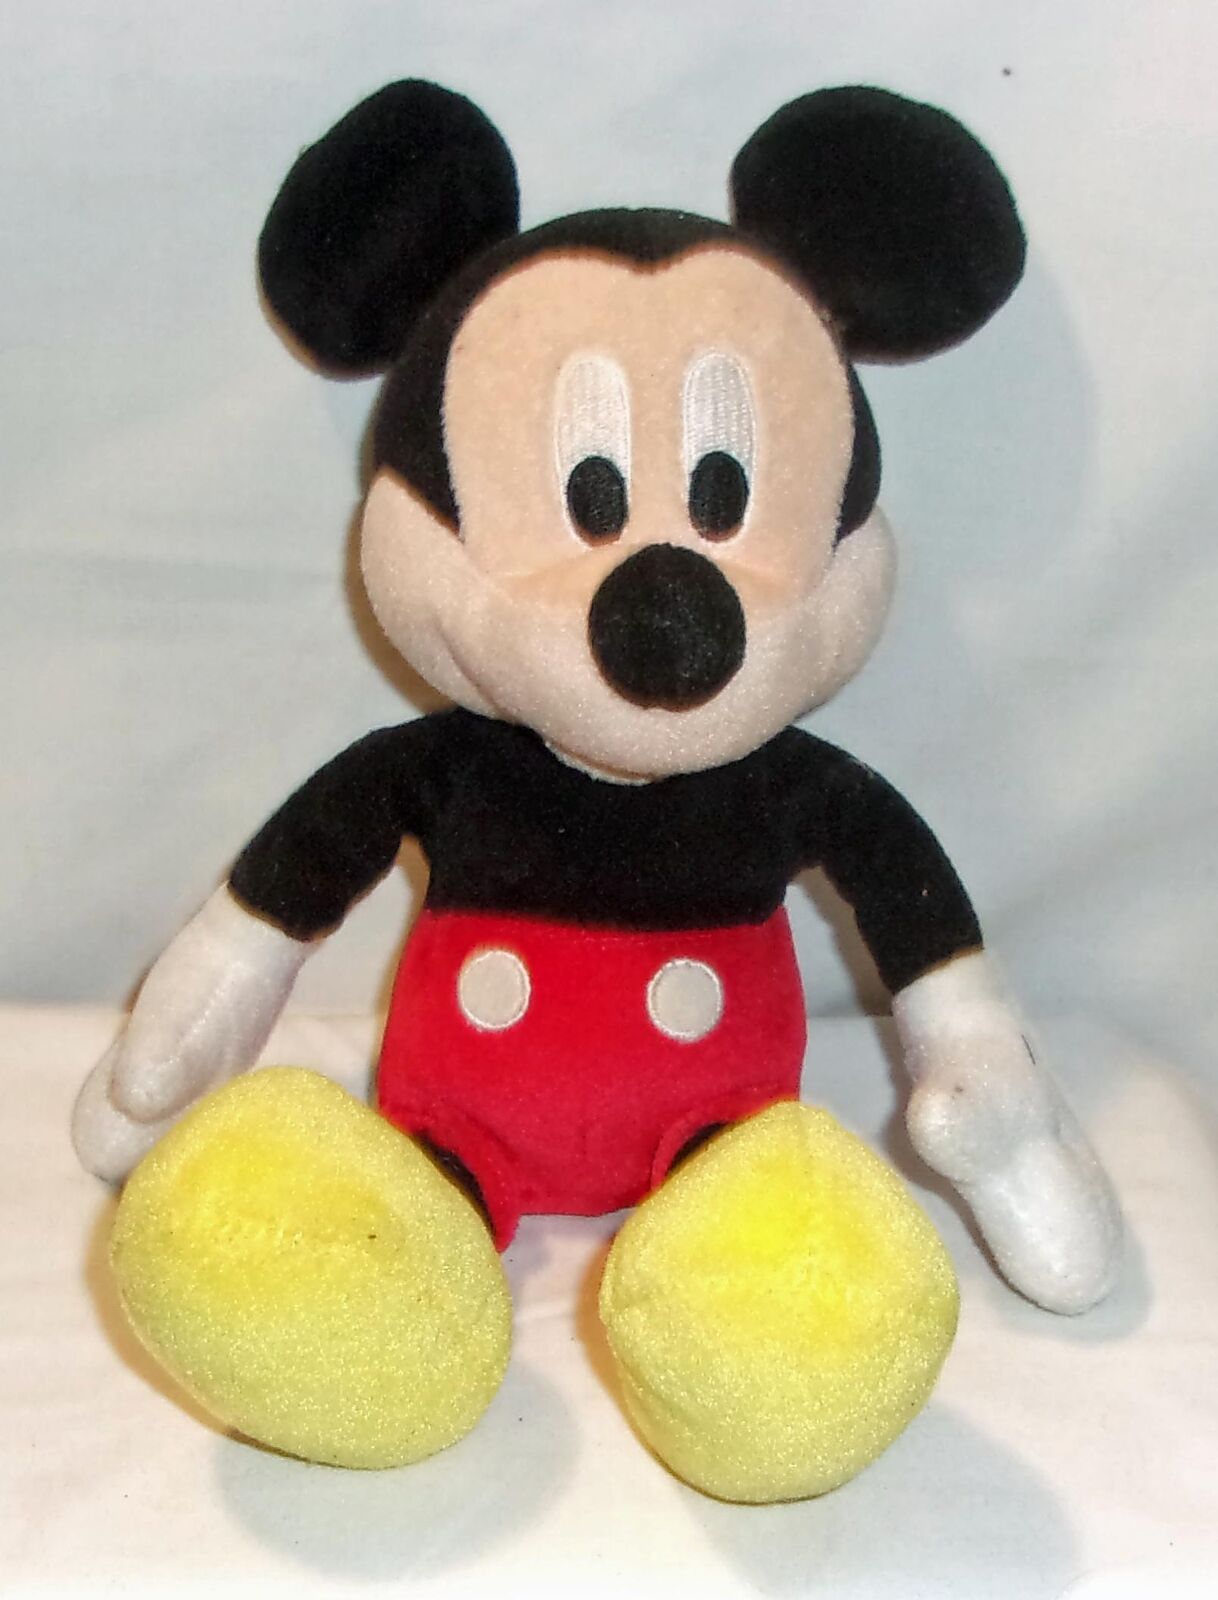 Disney Plush Stuffed Mickey Mouse Doll - Dream International Limited